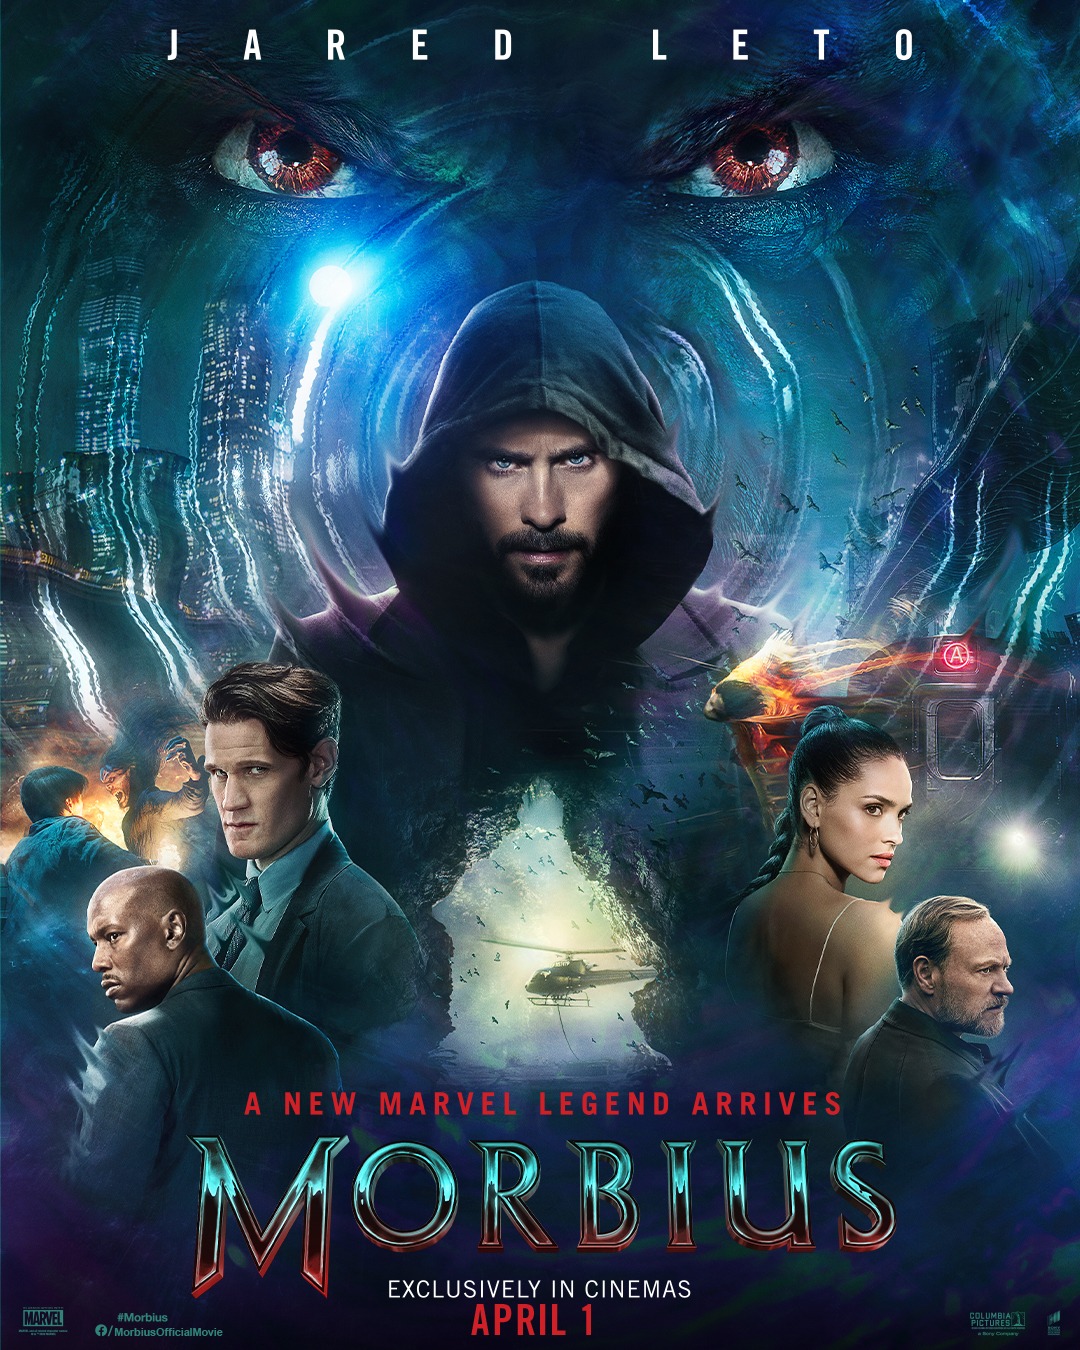 Jared Leto Morbius poster April 1 release date